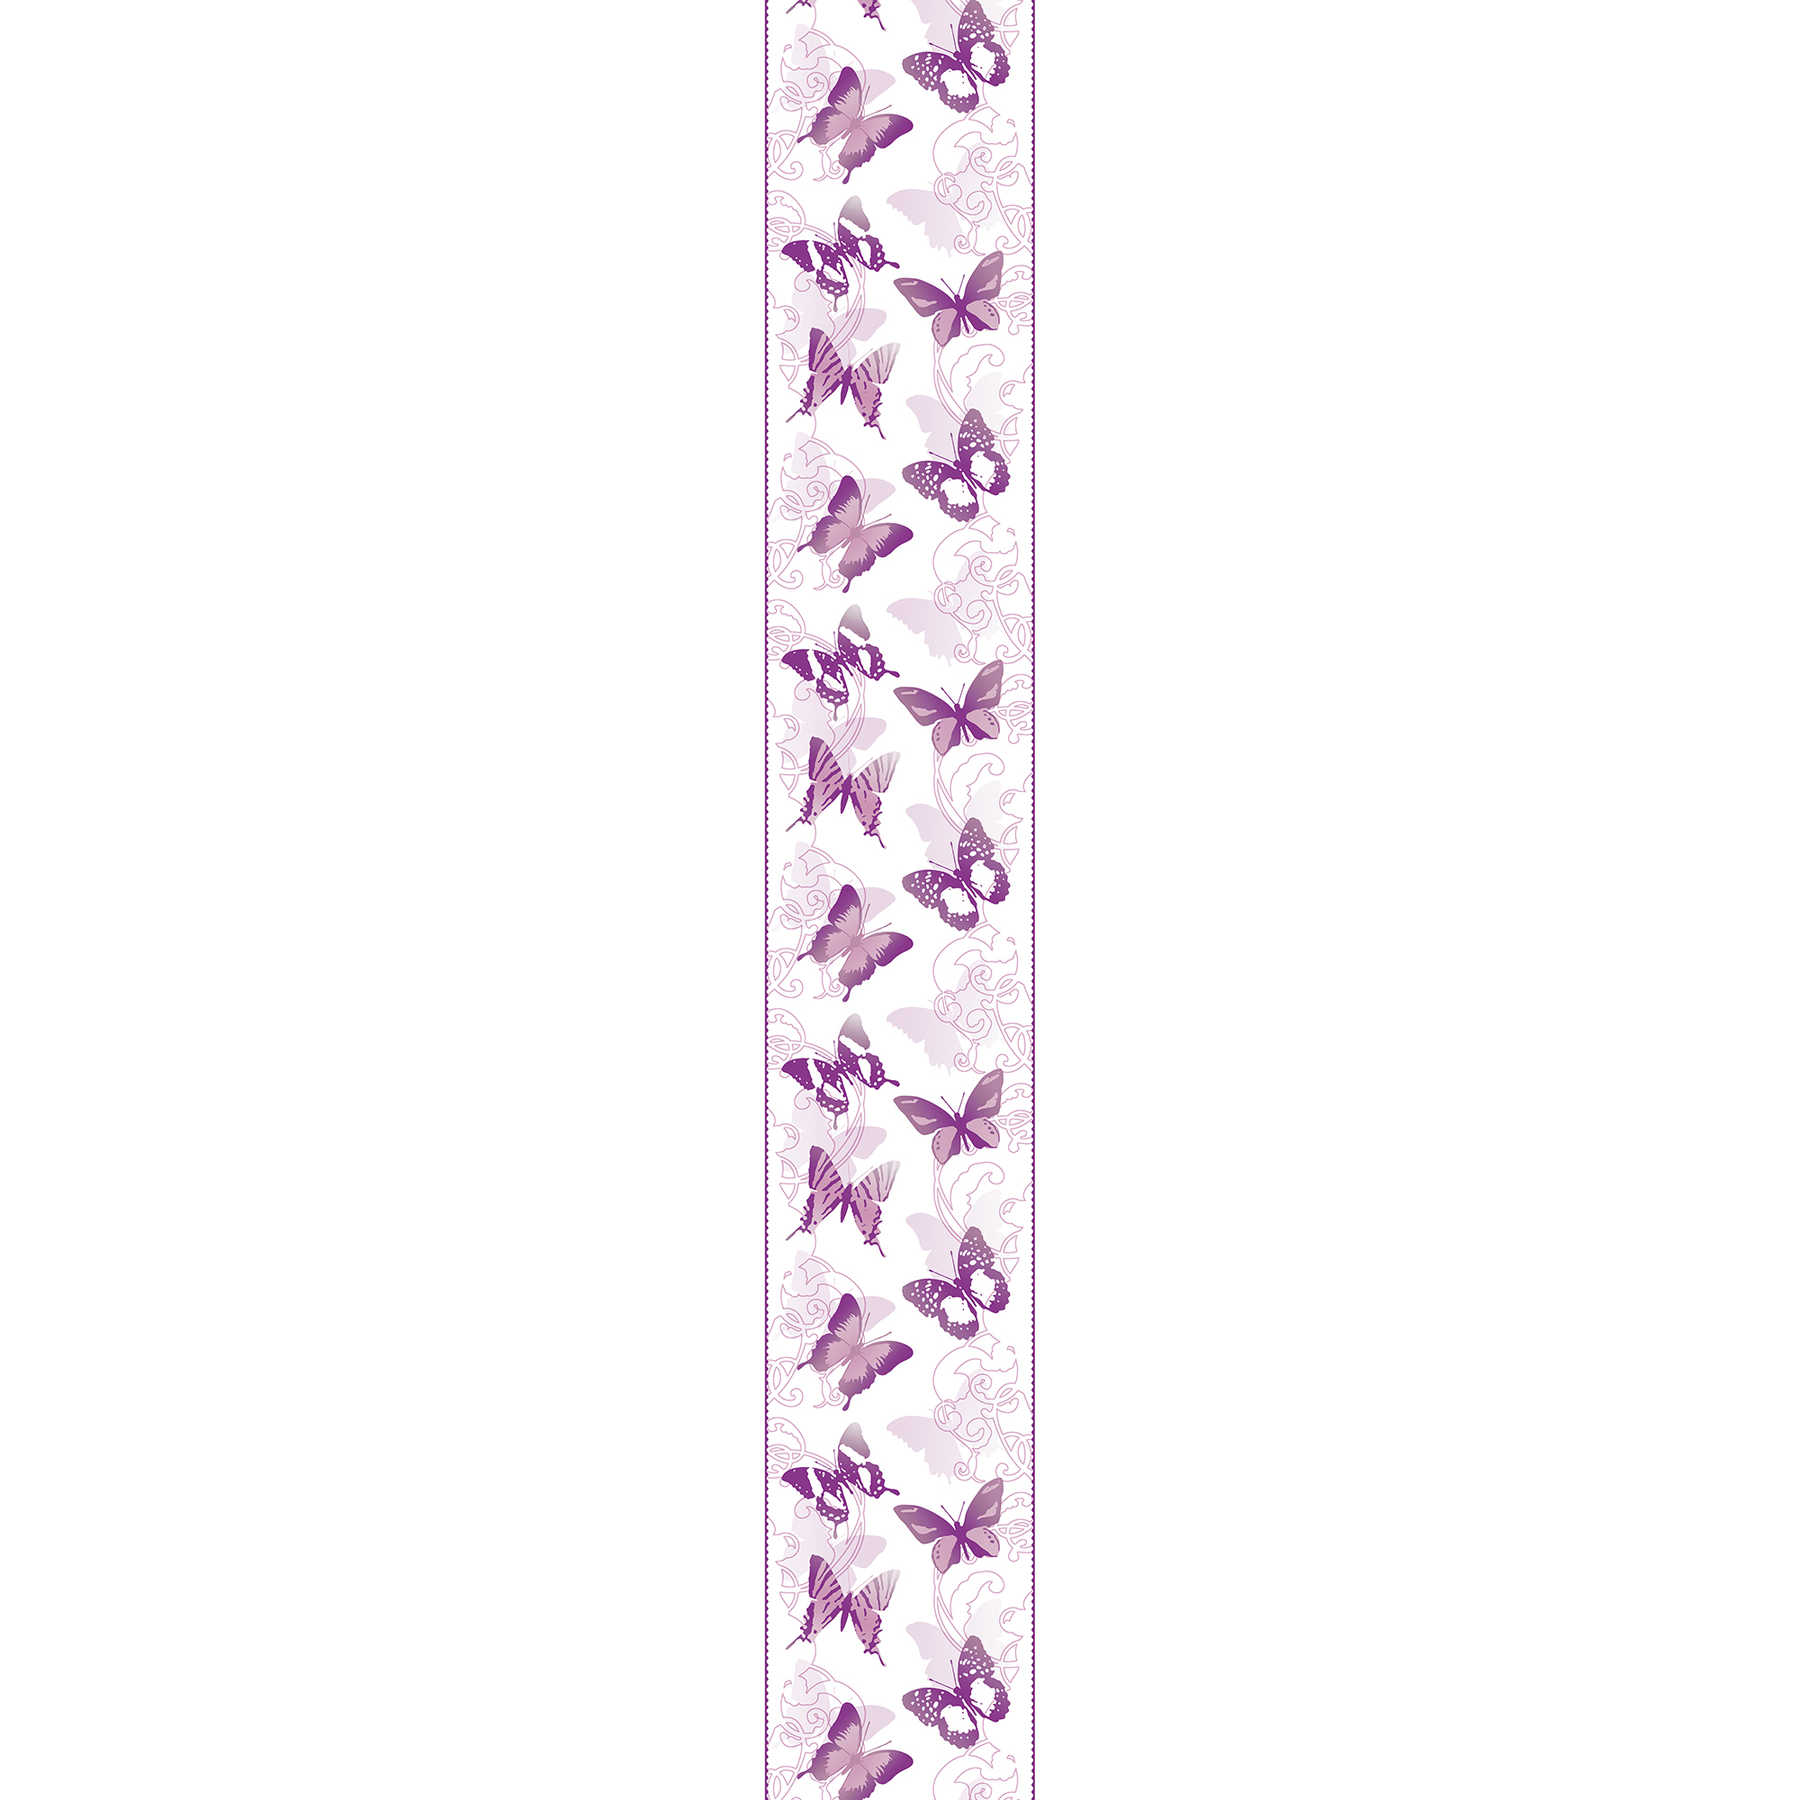 Butterfly wallpaper graphic pattern for girls - purple
